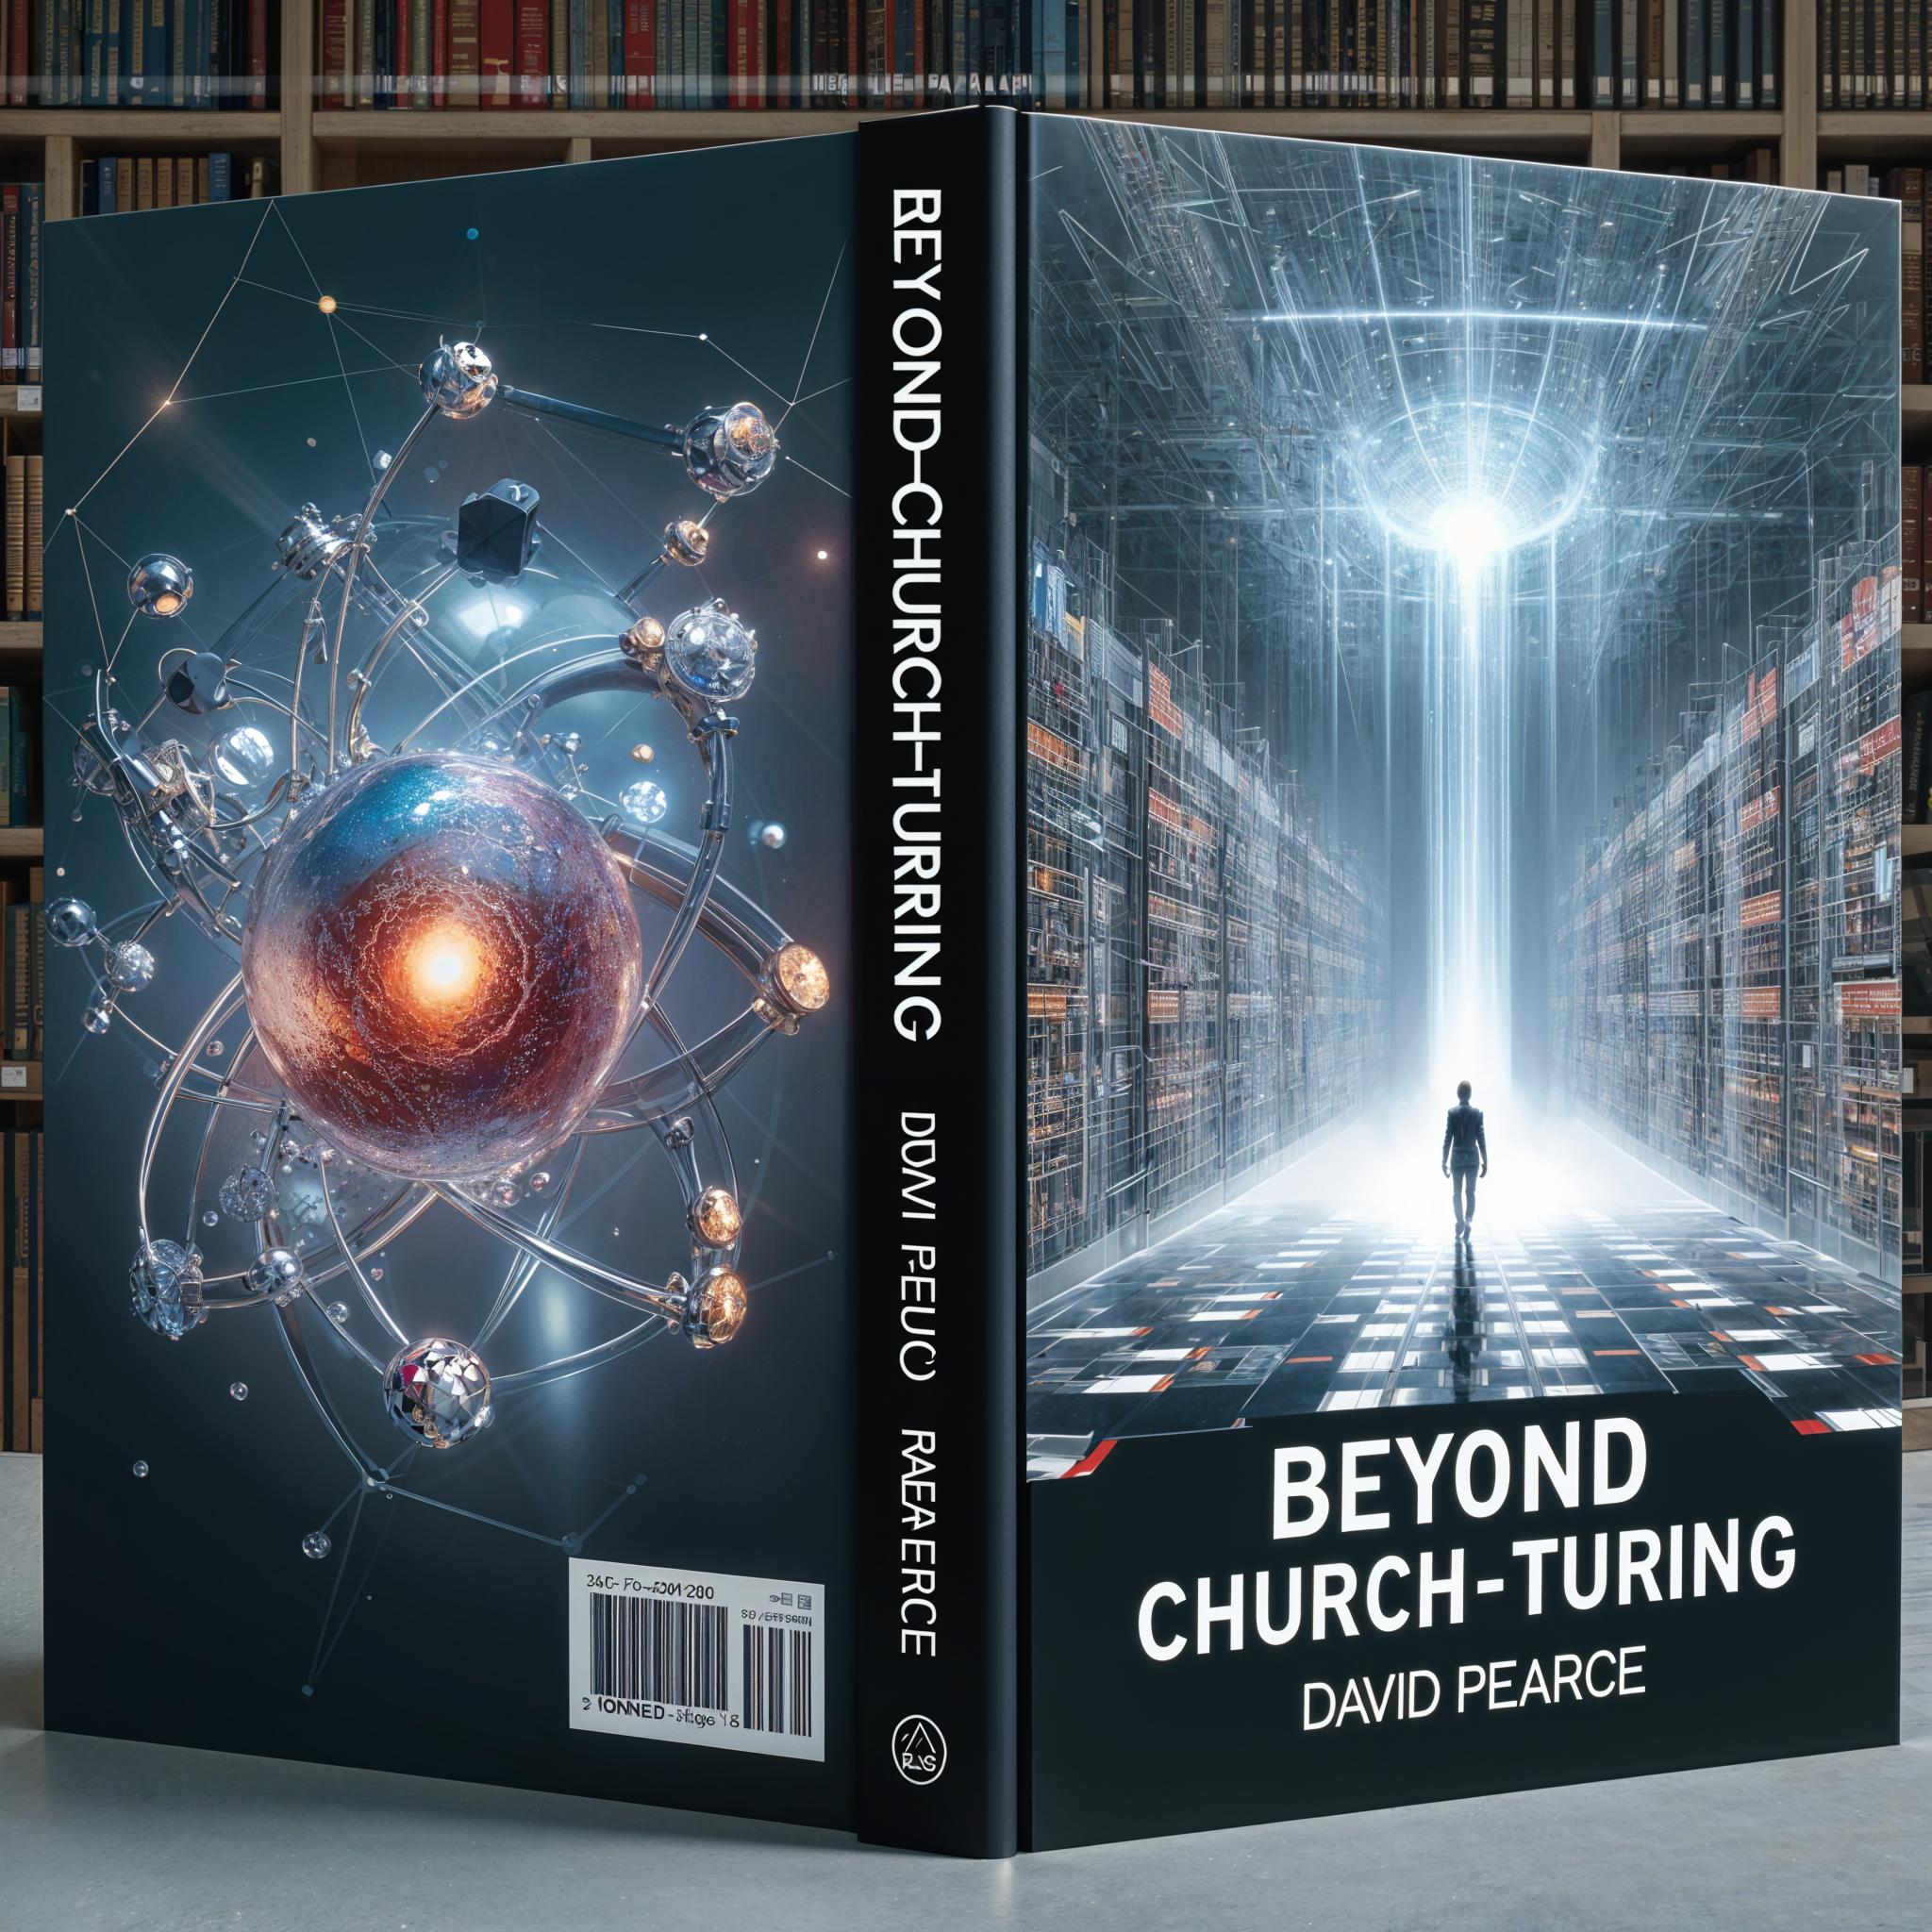 Beyond Church-Turing by David Pearce